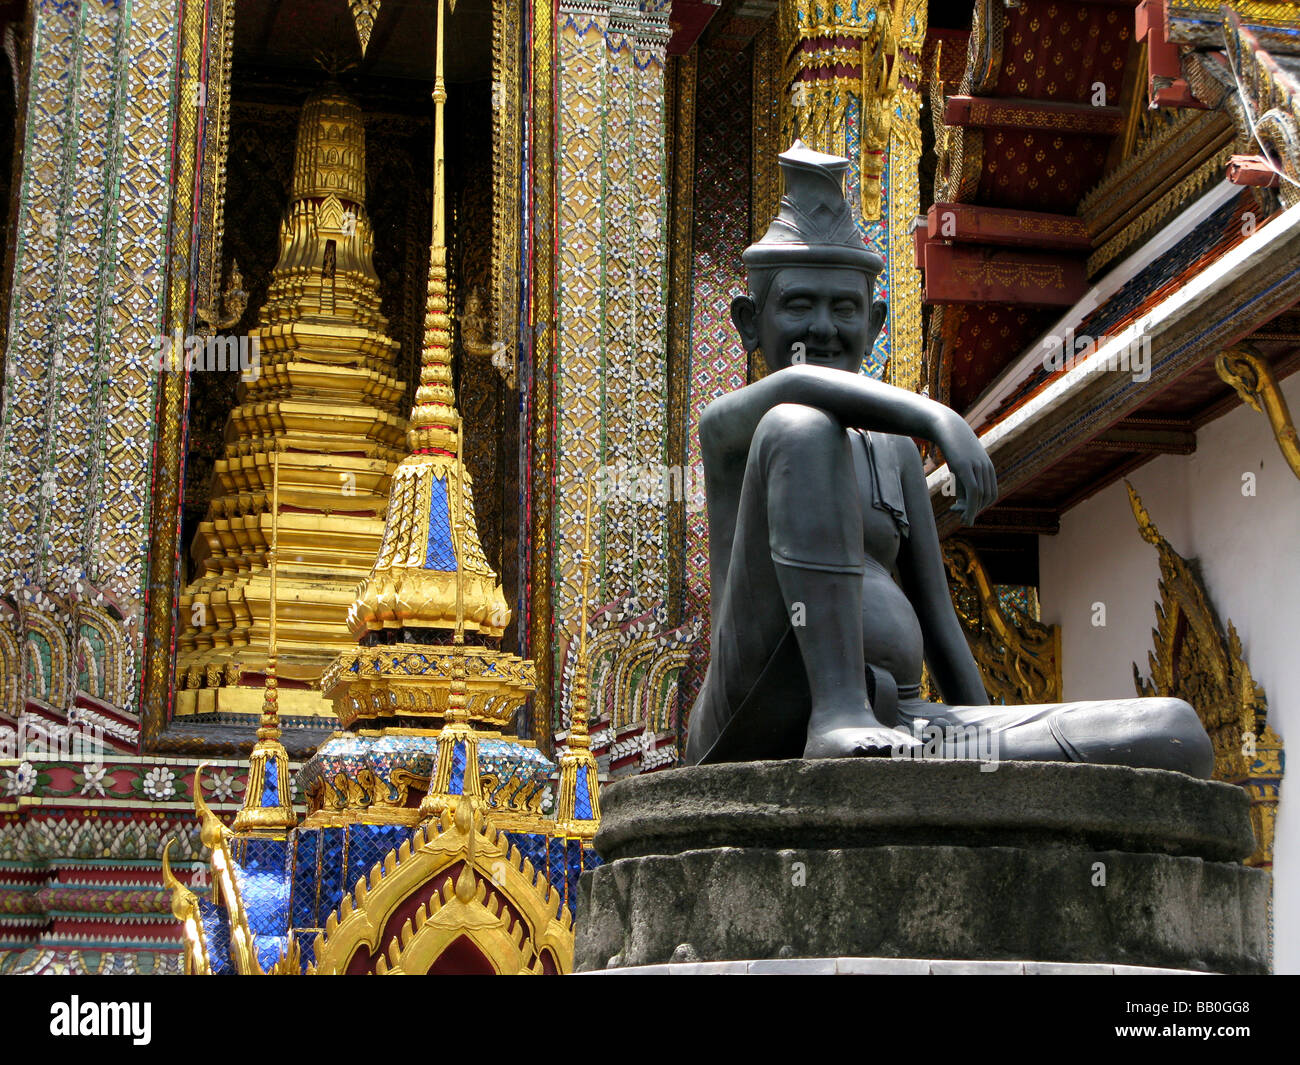 Statue and gilded decorations at Wat Phra Kaeo temple Bangkok Thailand Stock Photo